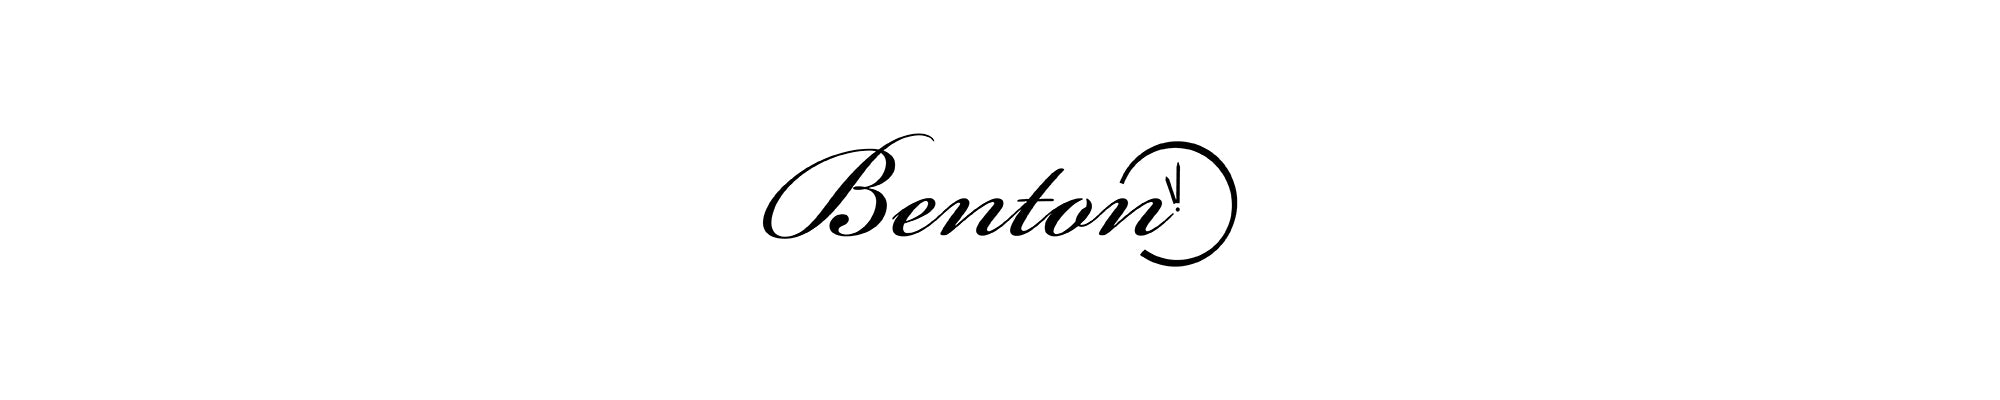 BENTON